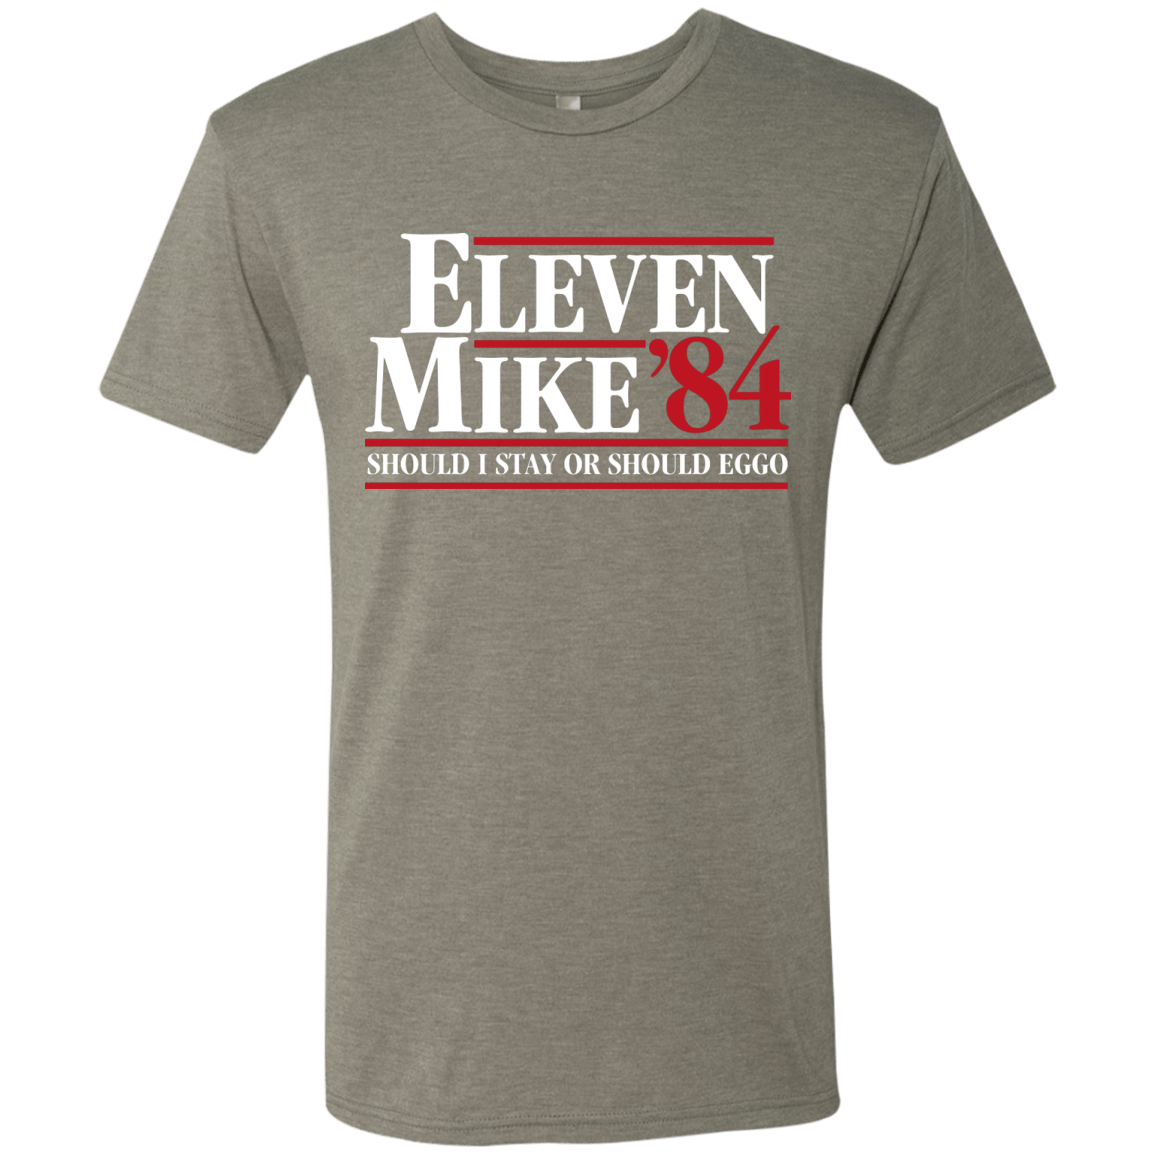 T-Shirts Venetian Grey / Small Eleven Mike 84 - Should I Stay or Should Eggo Men's Triblend T-Shirt